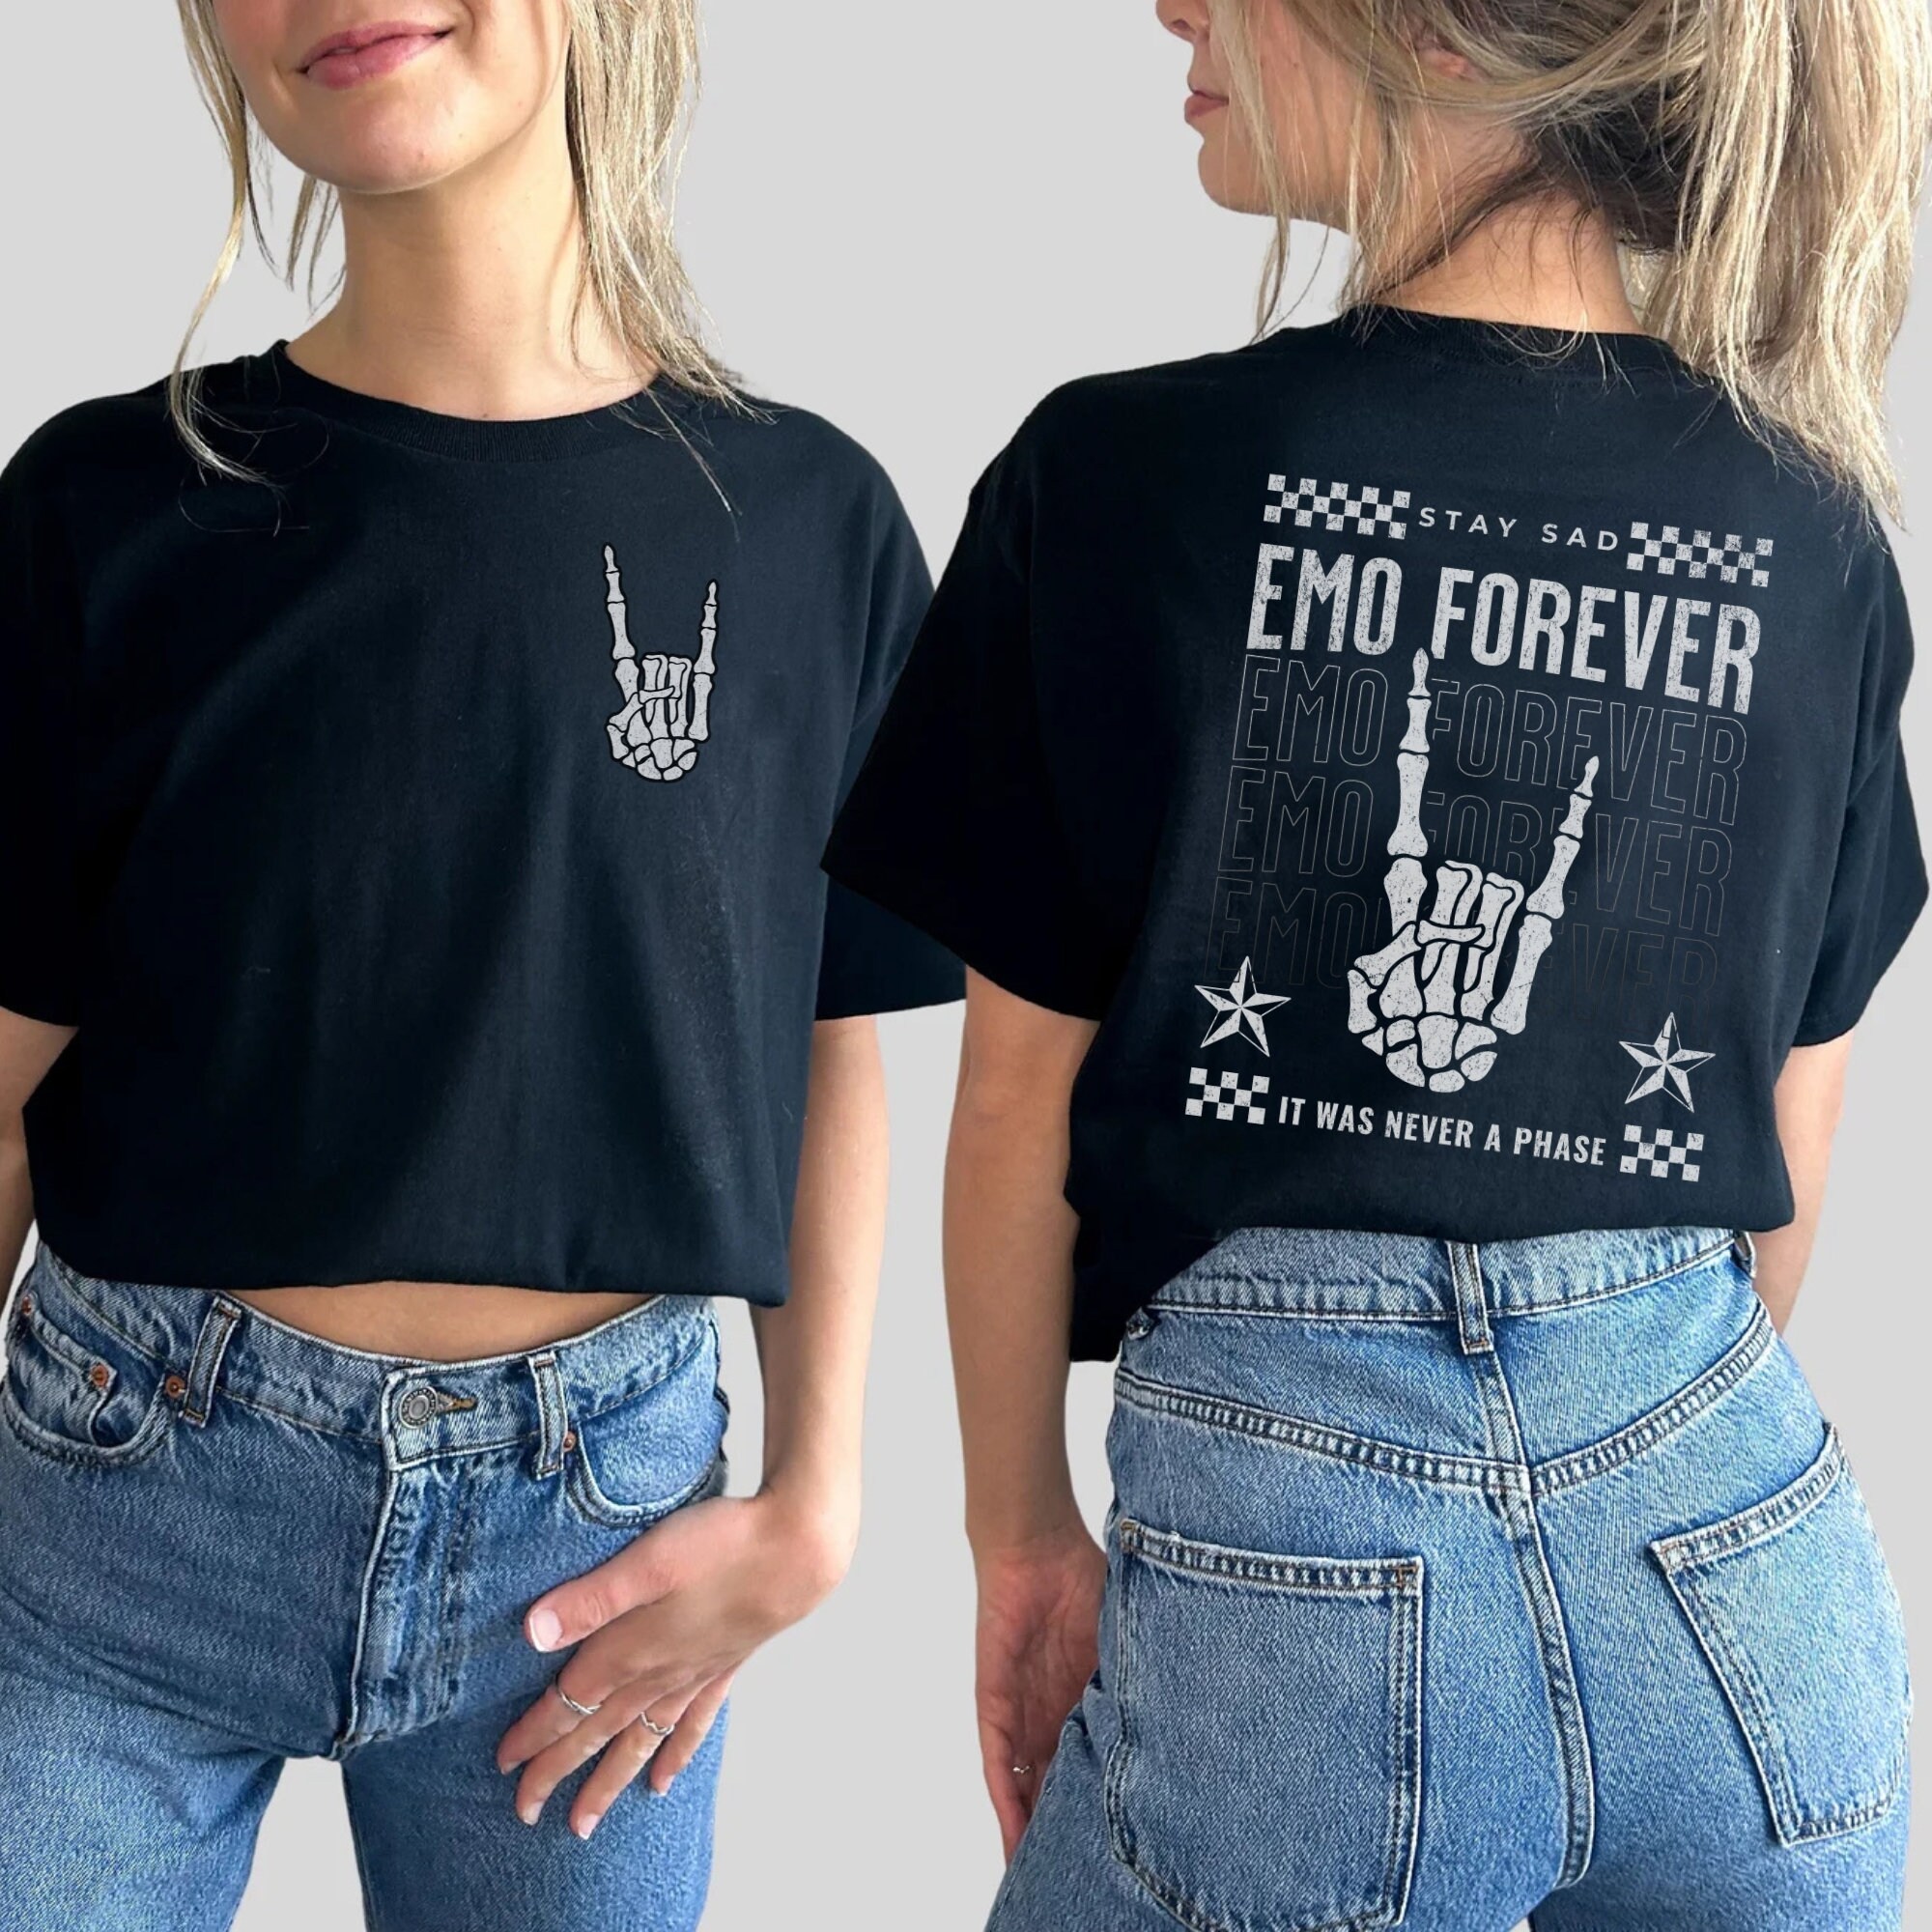 Elder Emo Shirt, It Was Never A Phase, Emo Concert Shirt, Emo Clothing, Emo Outfit, Stay Sad, Emo Festival Shirt, WWWY Shirt, Emo Nite Shirt